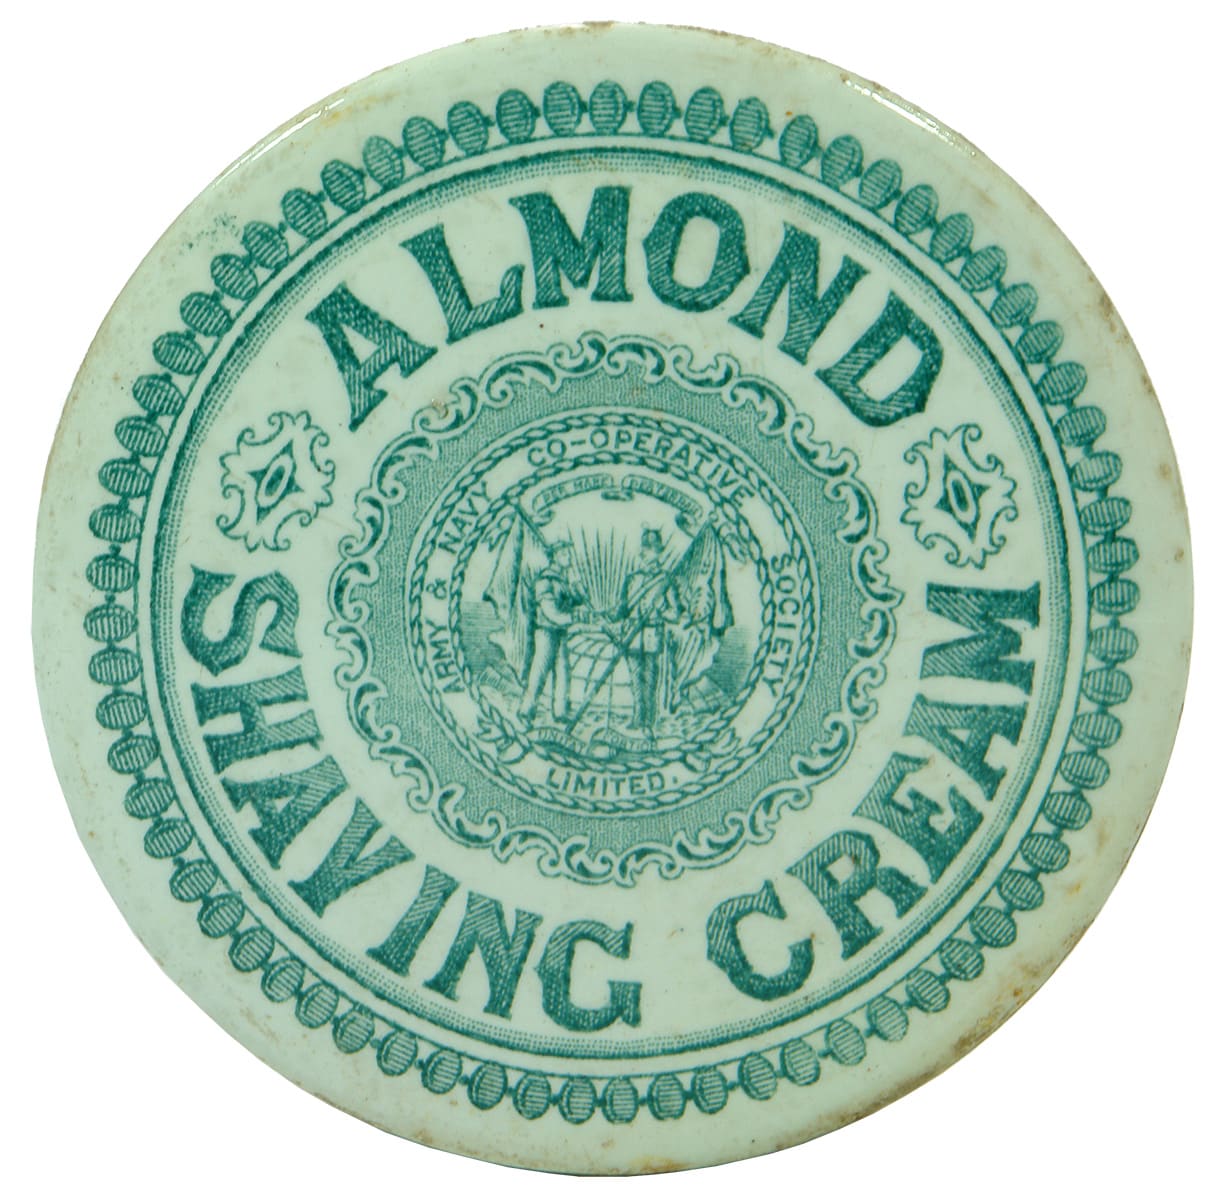 Army Navy Co-operative Almond Shaving Soap Potlid